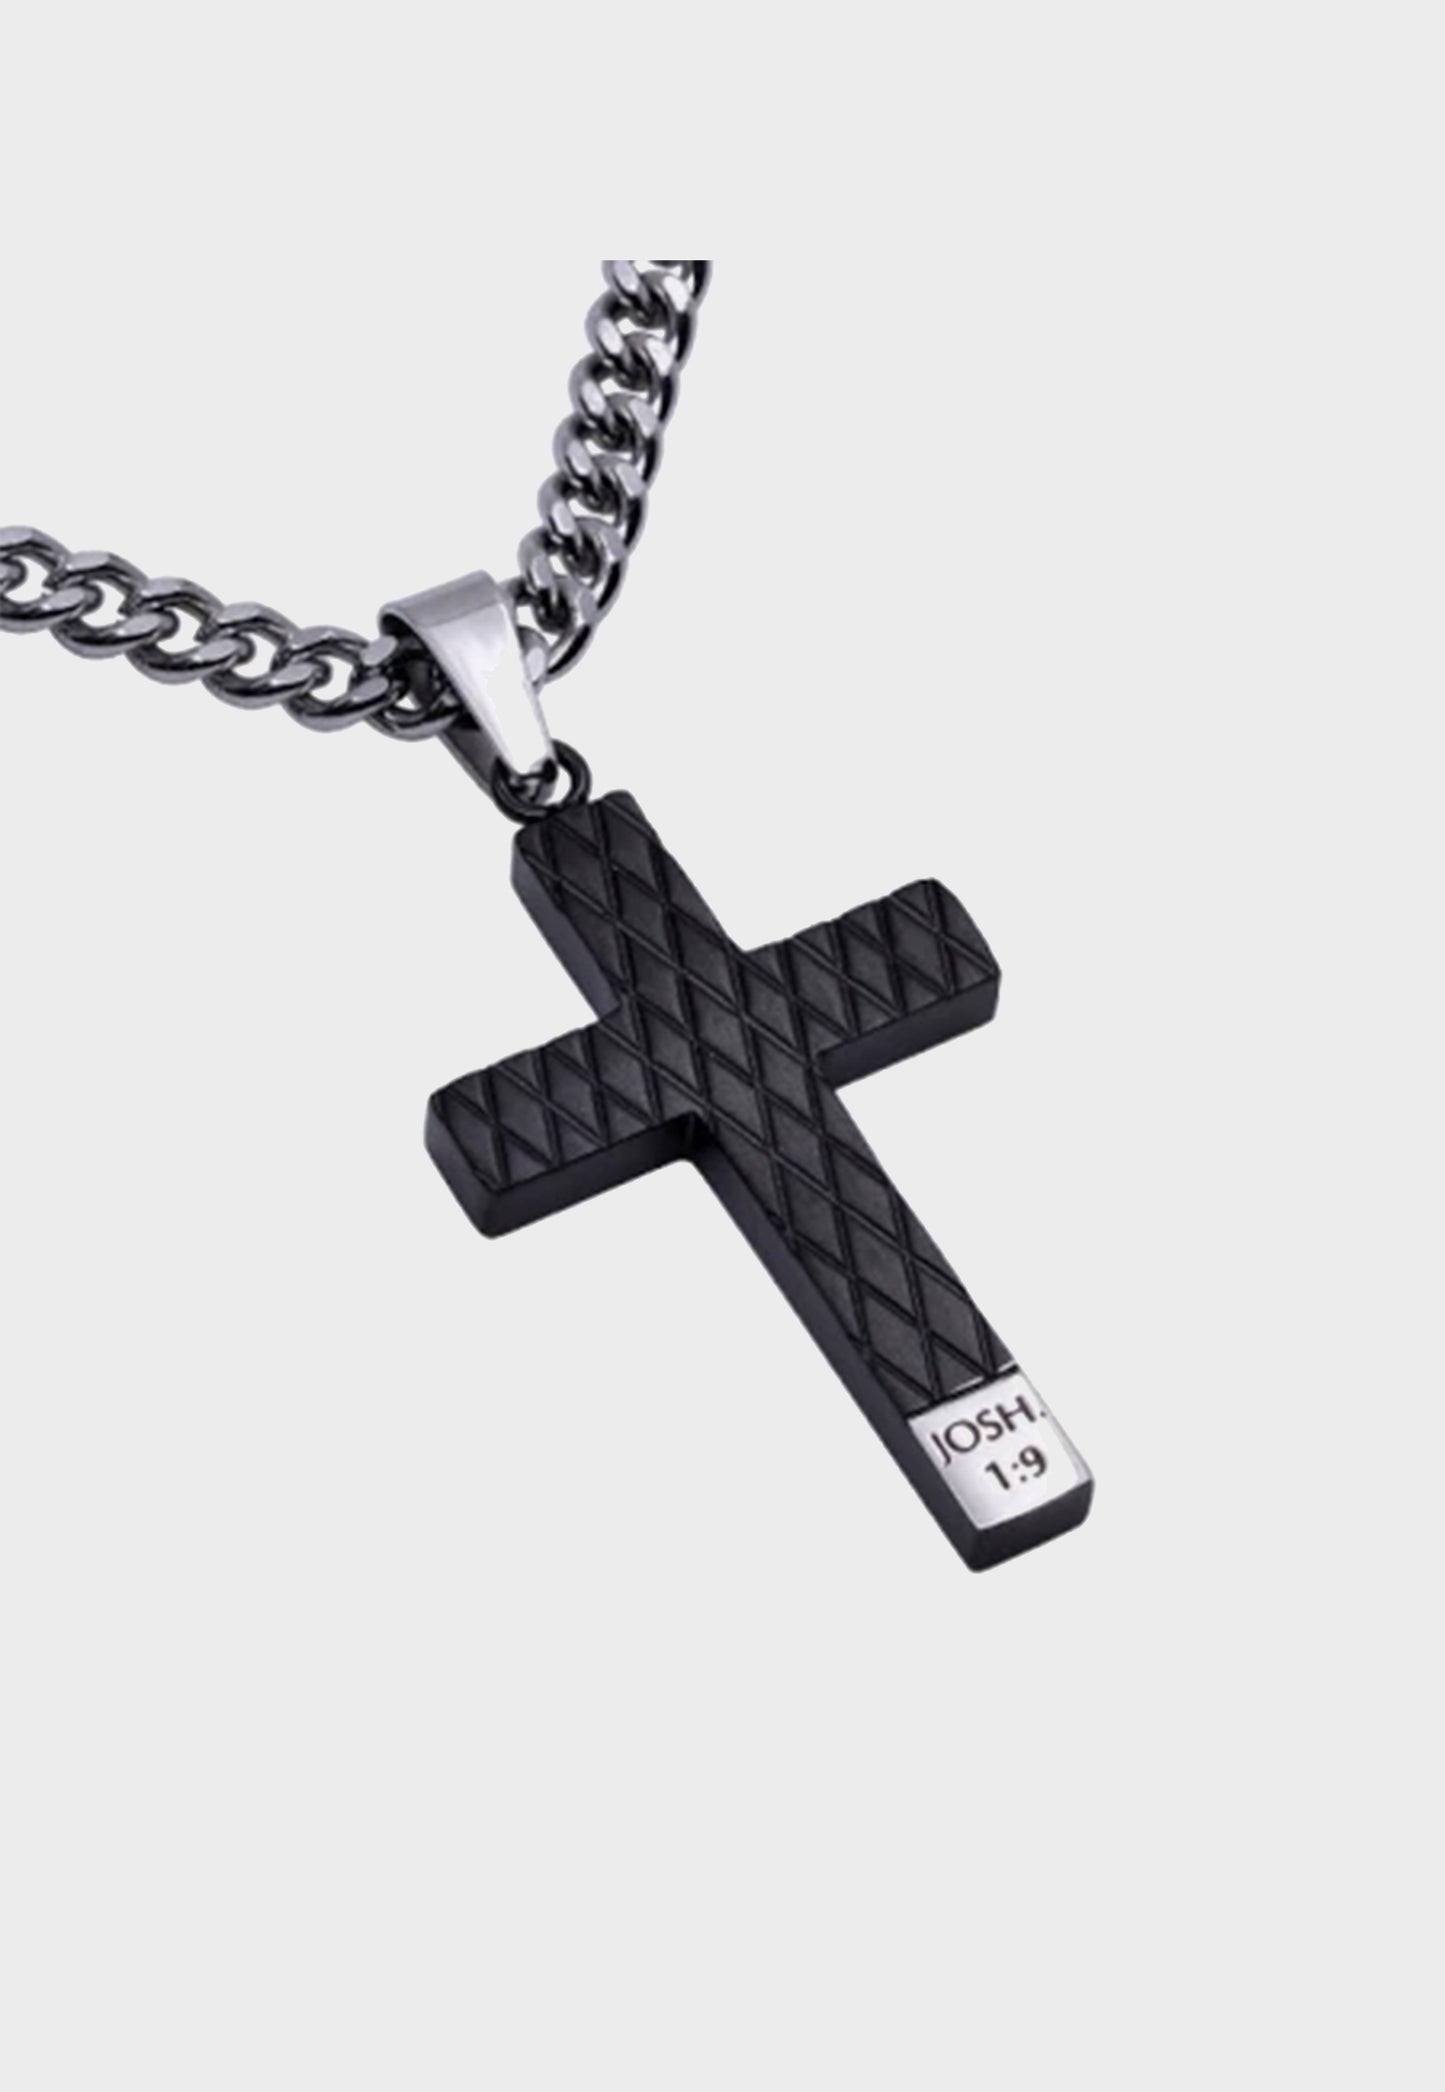 Joshua 1:9 mens necklace black cross